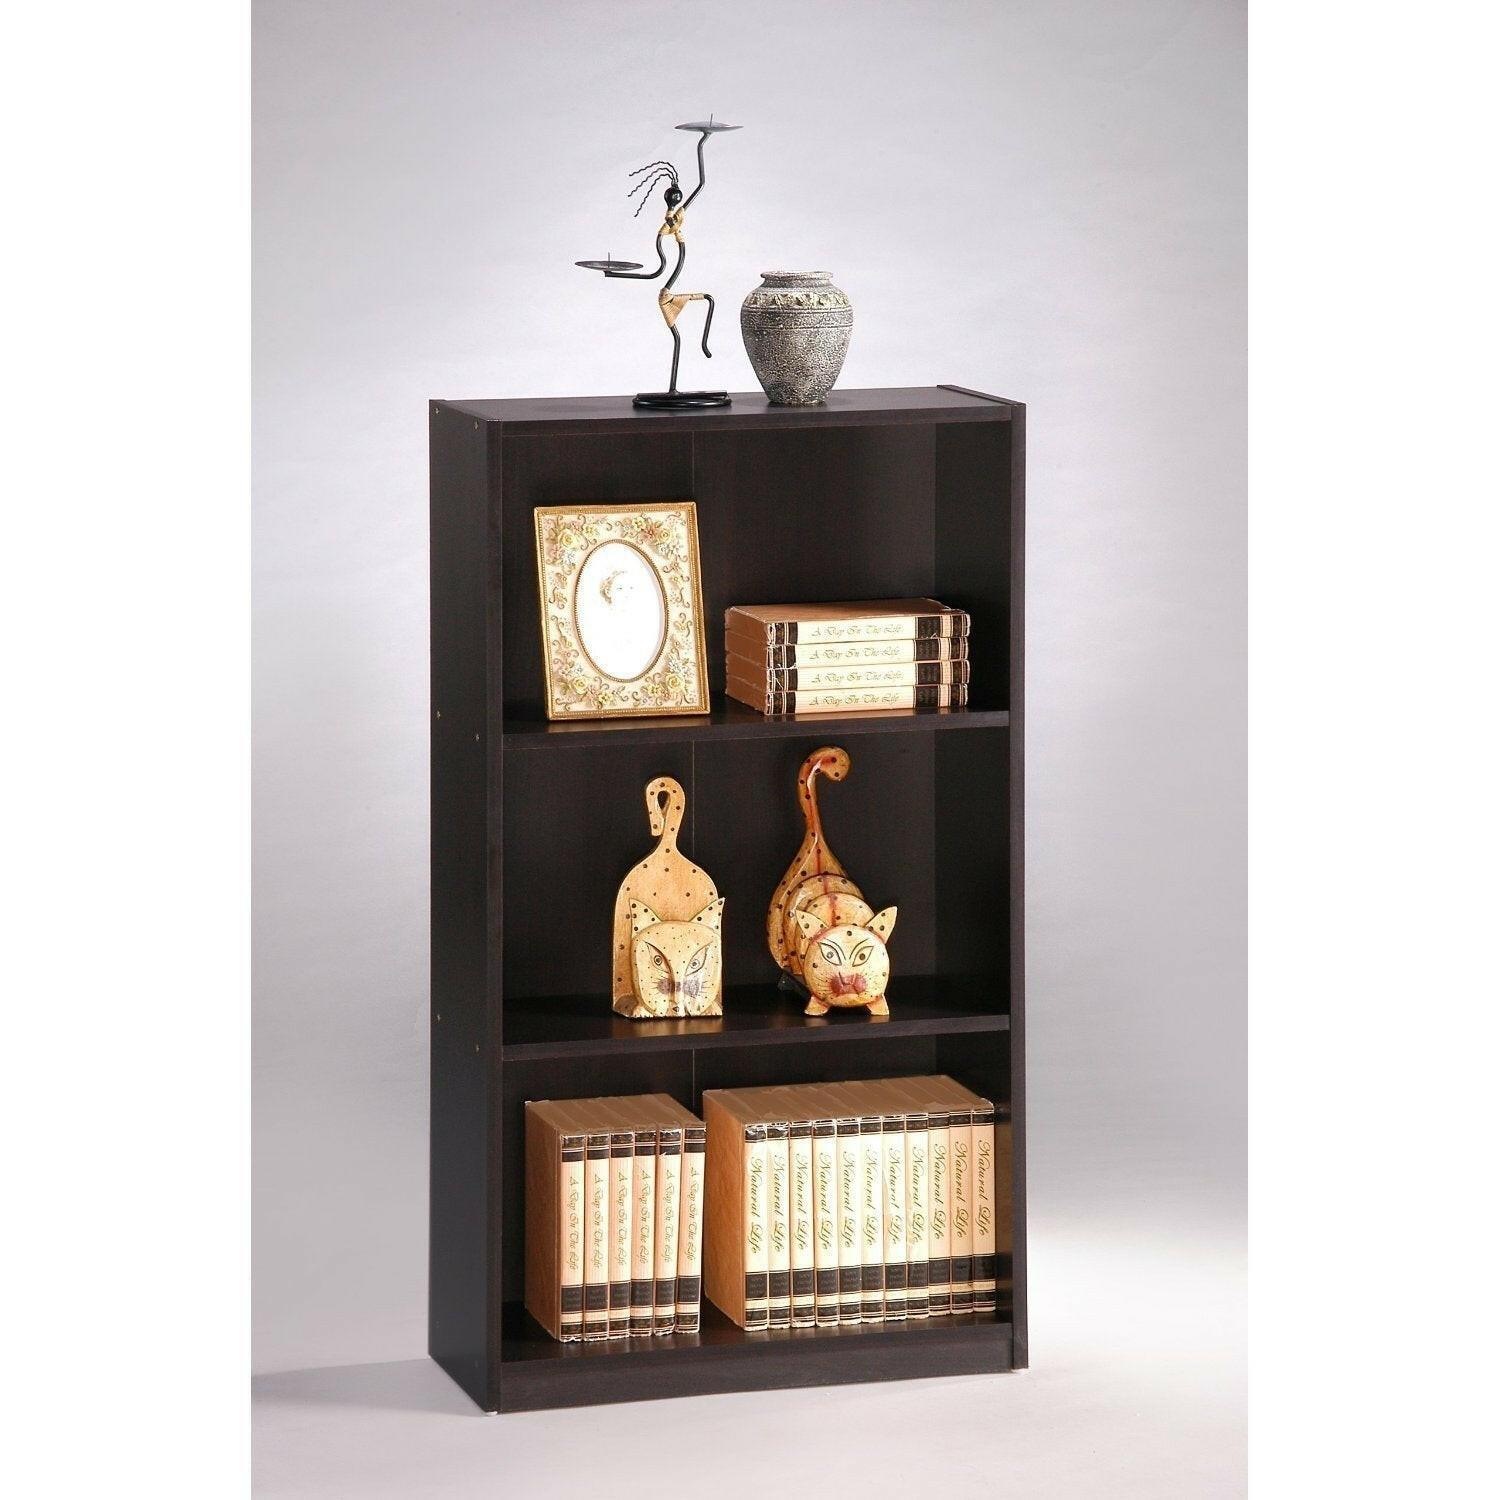 3-Tier Bookcase Storage Shelves in Espresso Finish - FurniFindUSA